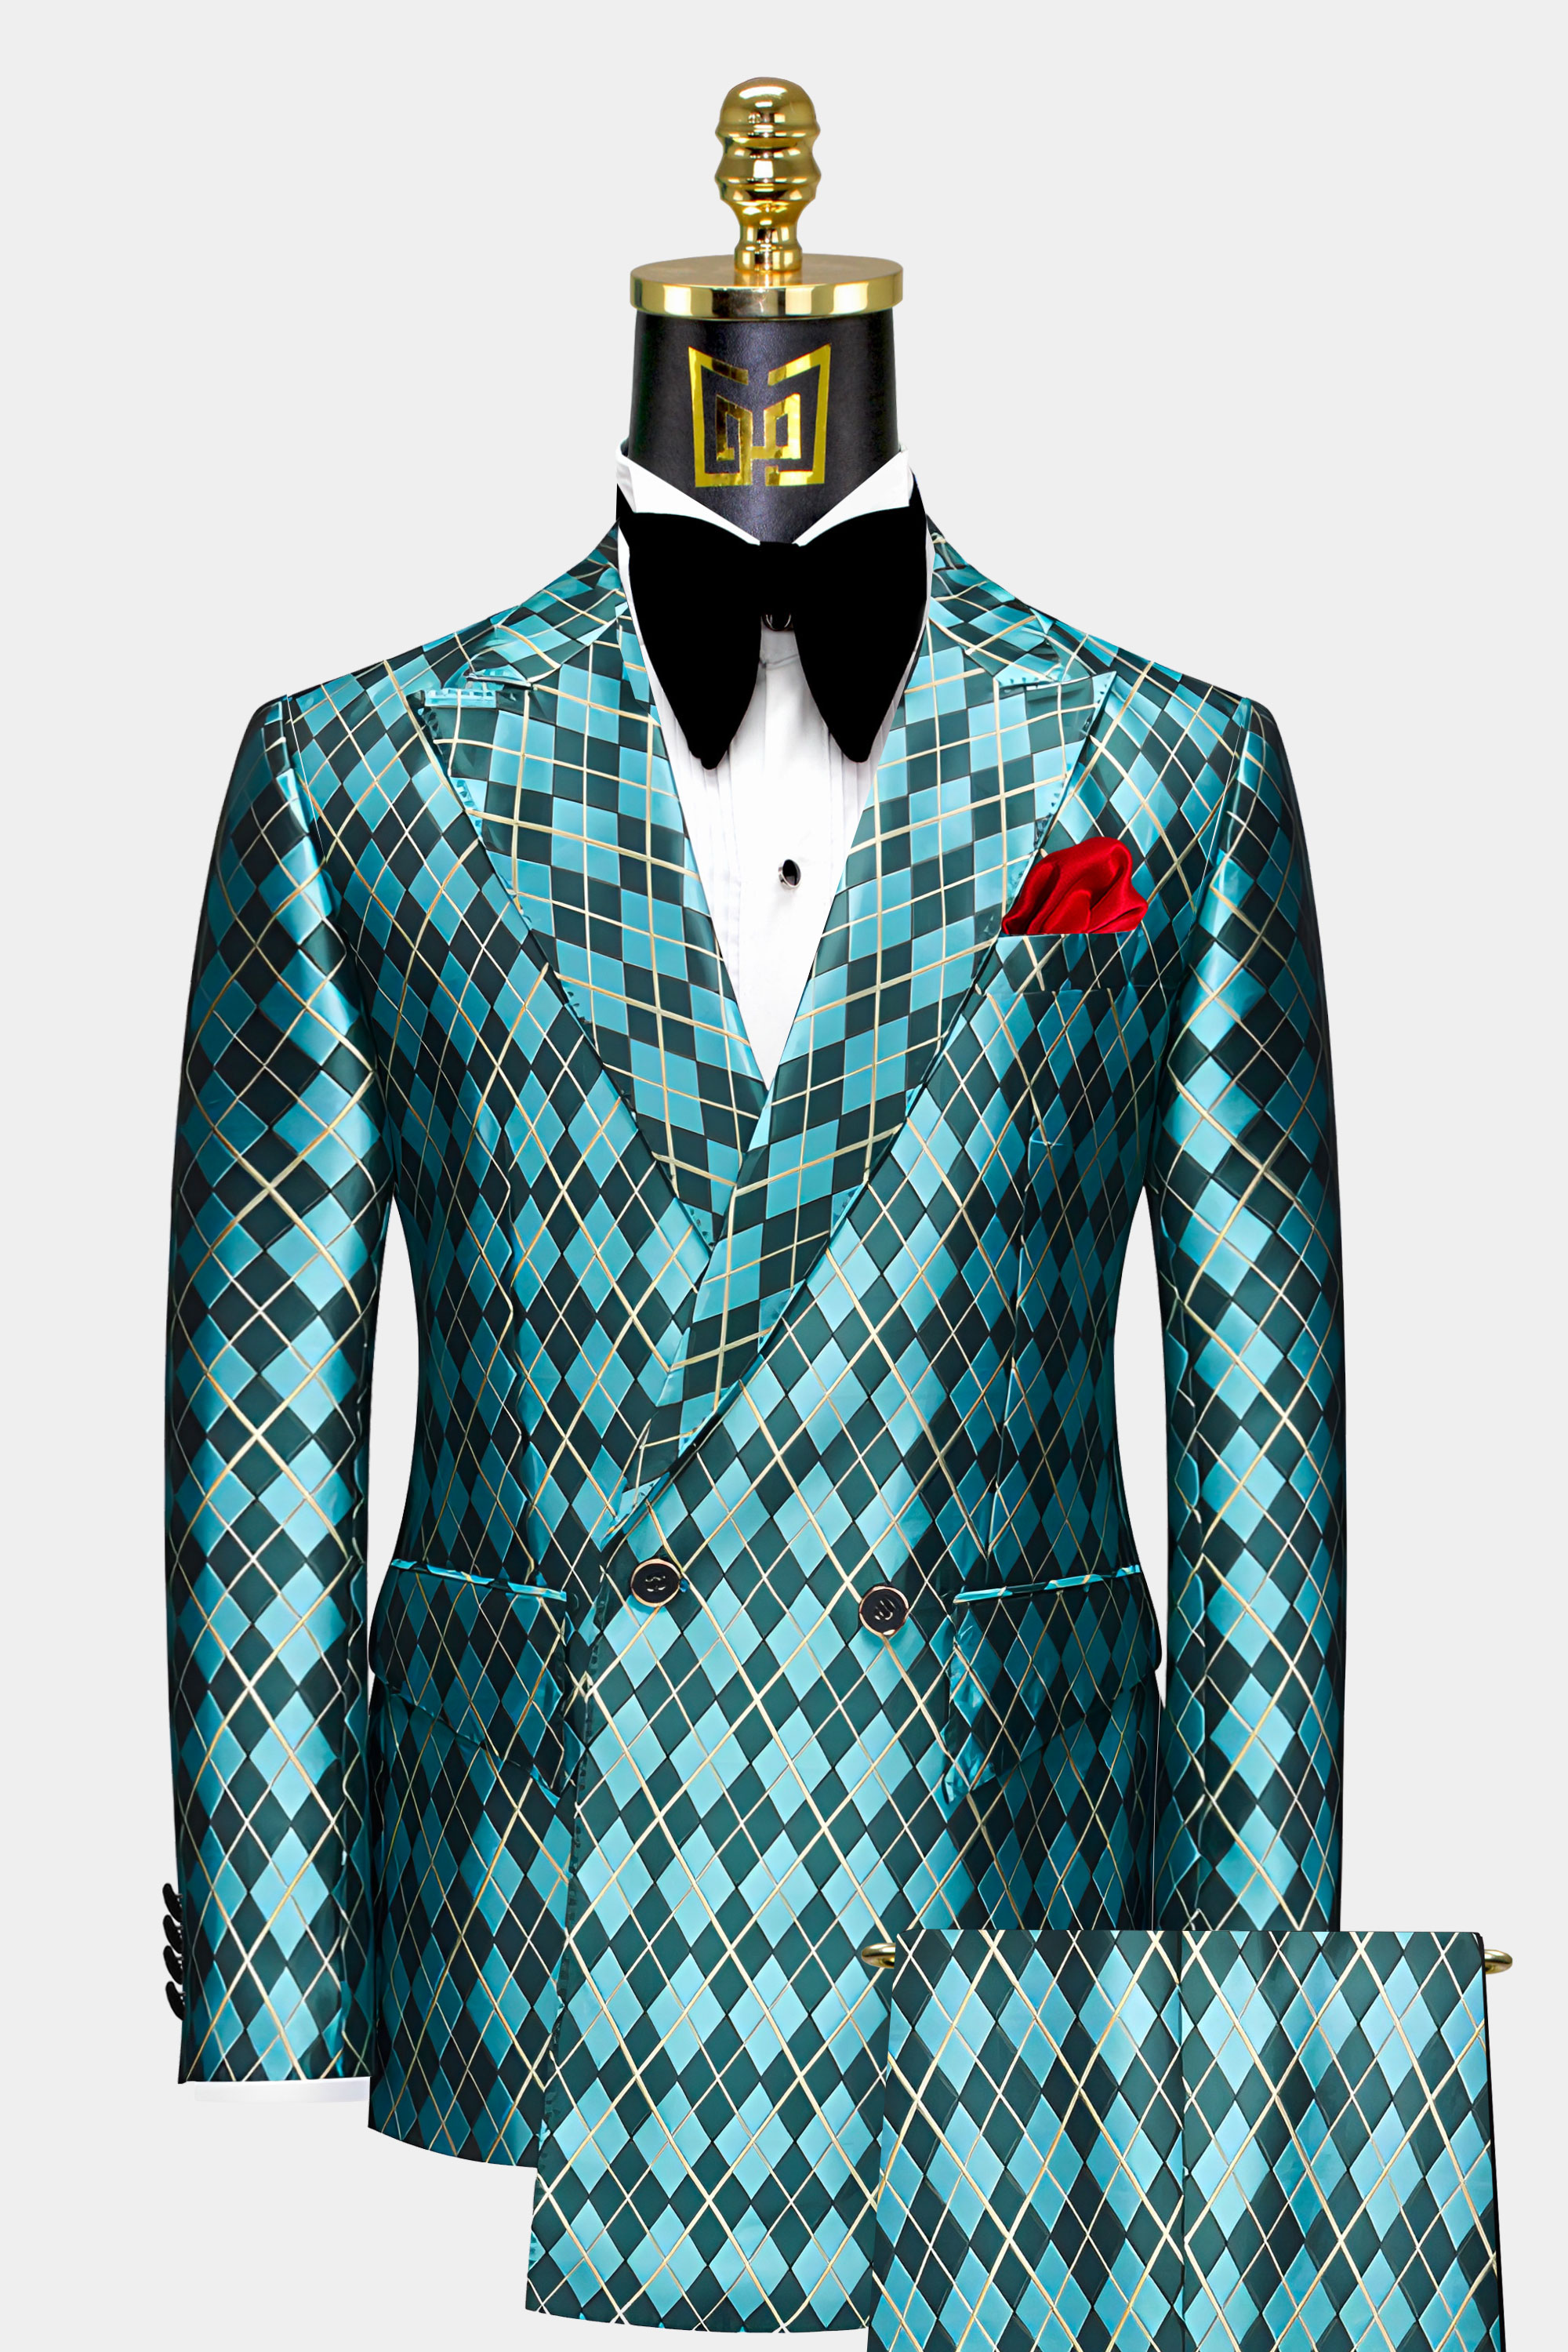 Double Breasted Turquoise Argyle Suit Morning Groom Wedding Tuxedo From Gentlemansguru.com  